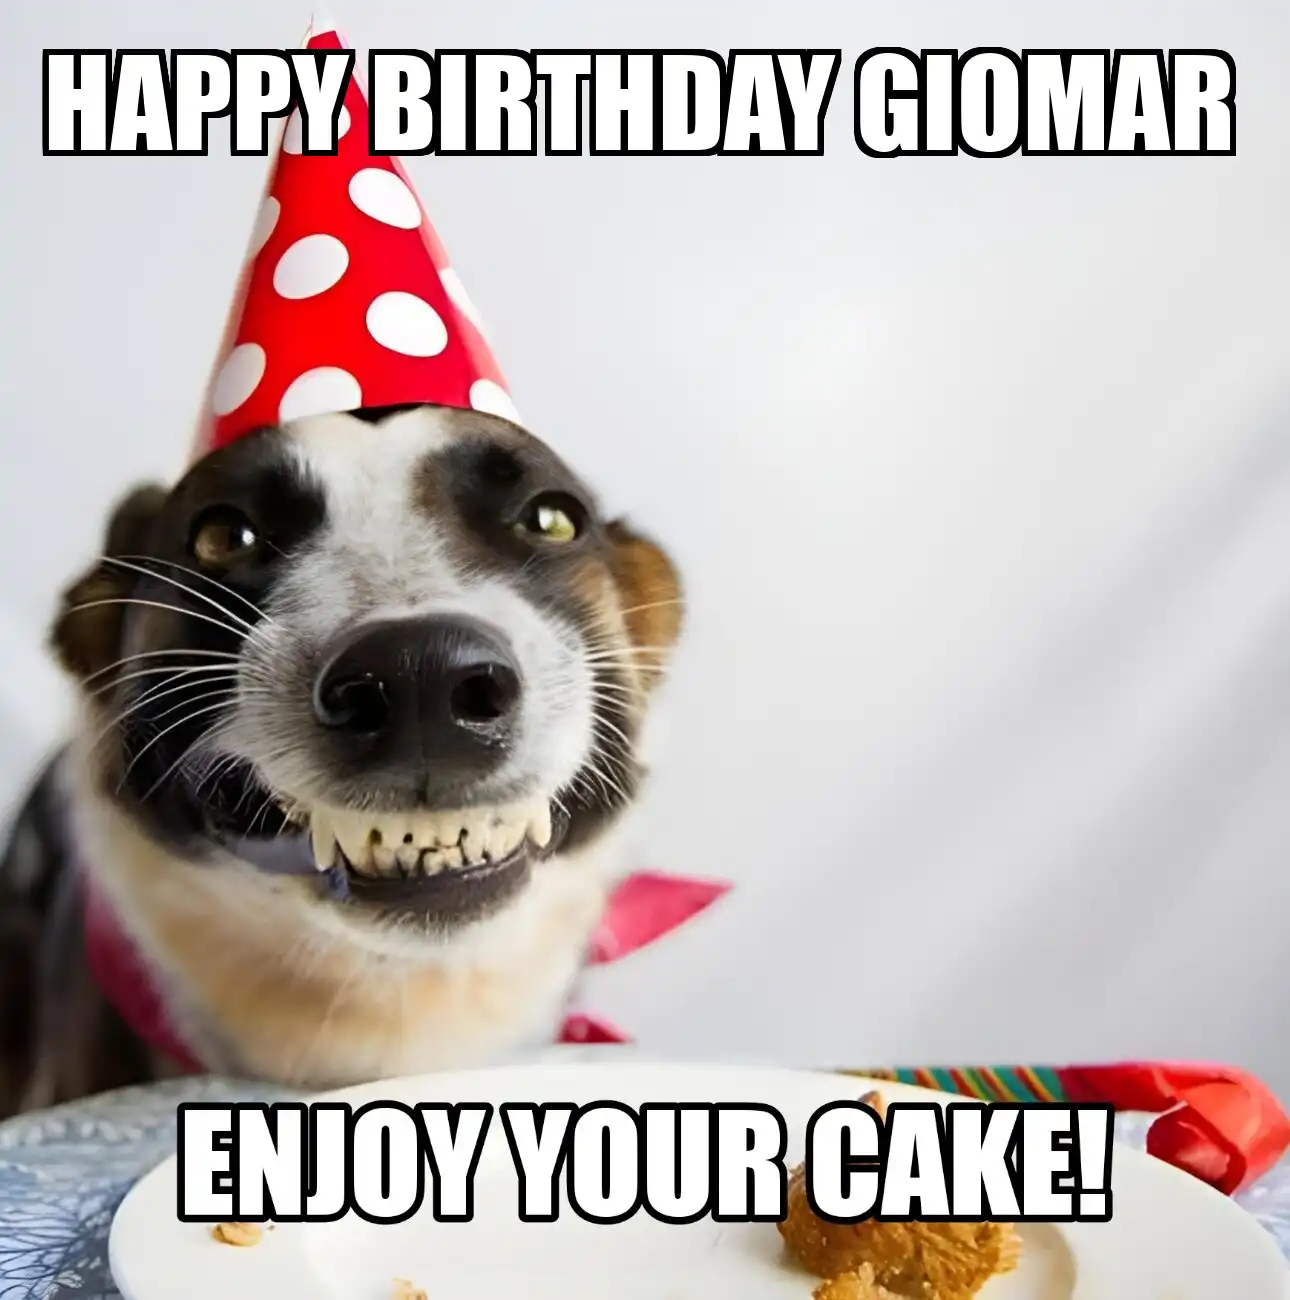 Happy Birthday Giomar Enjoy Your Cake Dog Meme